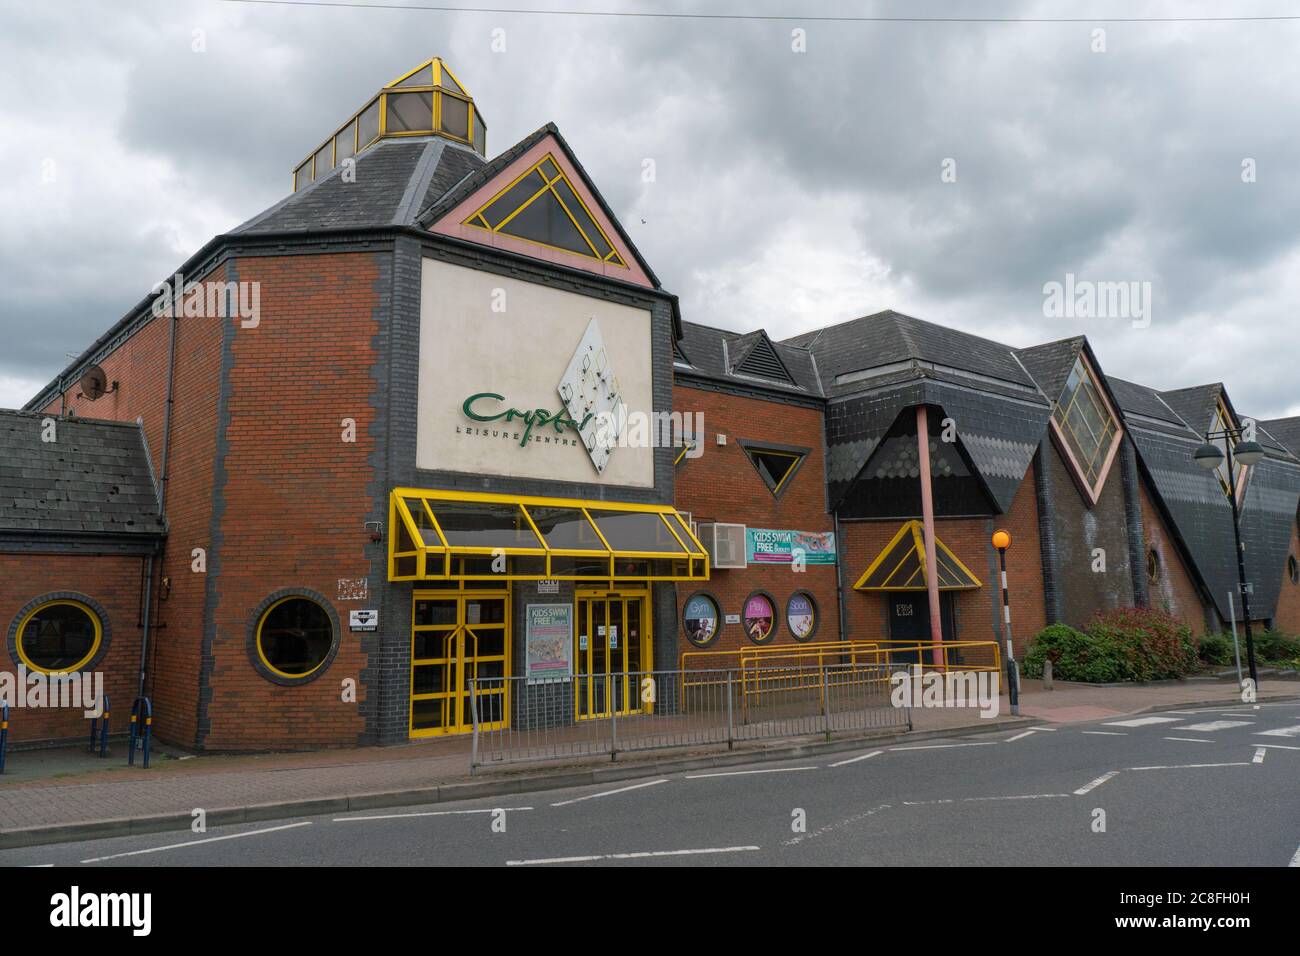 The Chrystal Liesure Centre. Stourbridge. West Midlands. UK Stock Photo